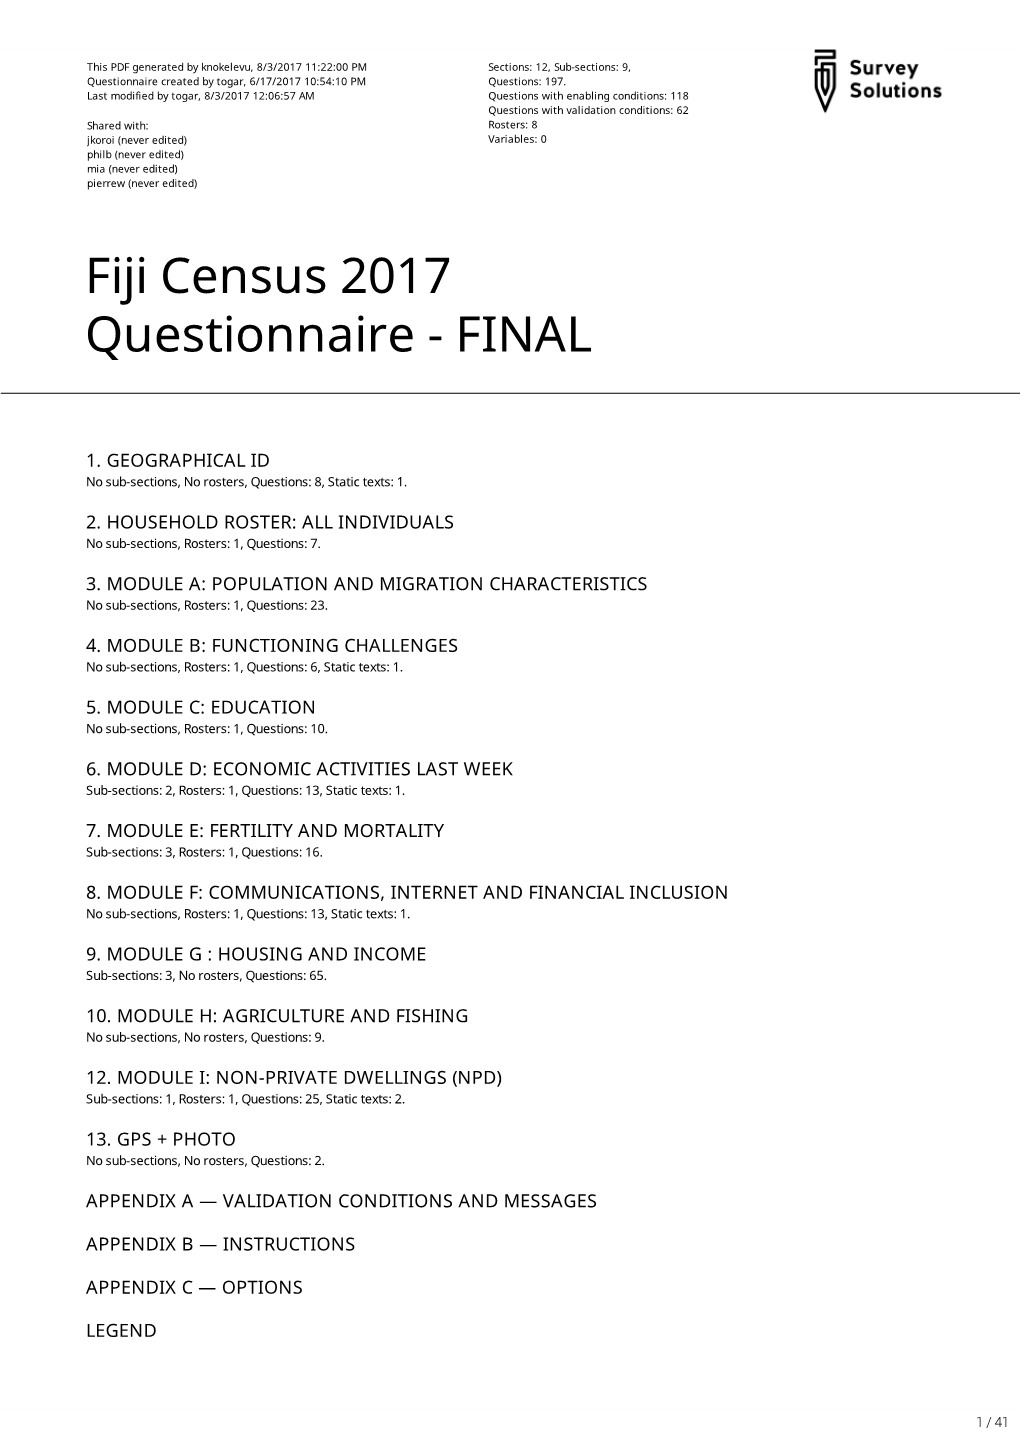 Fiji Census 2017 Questionnaire - FINAL